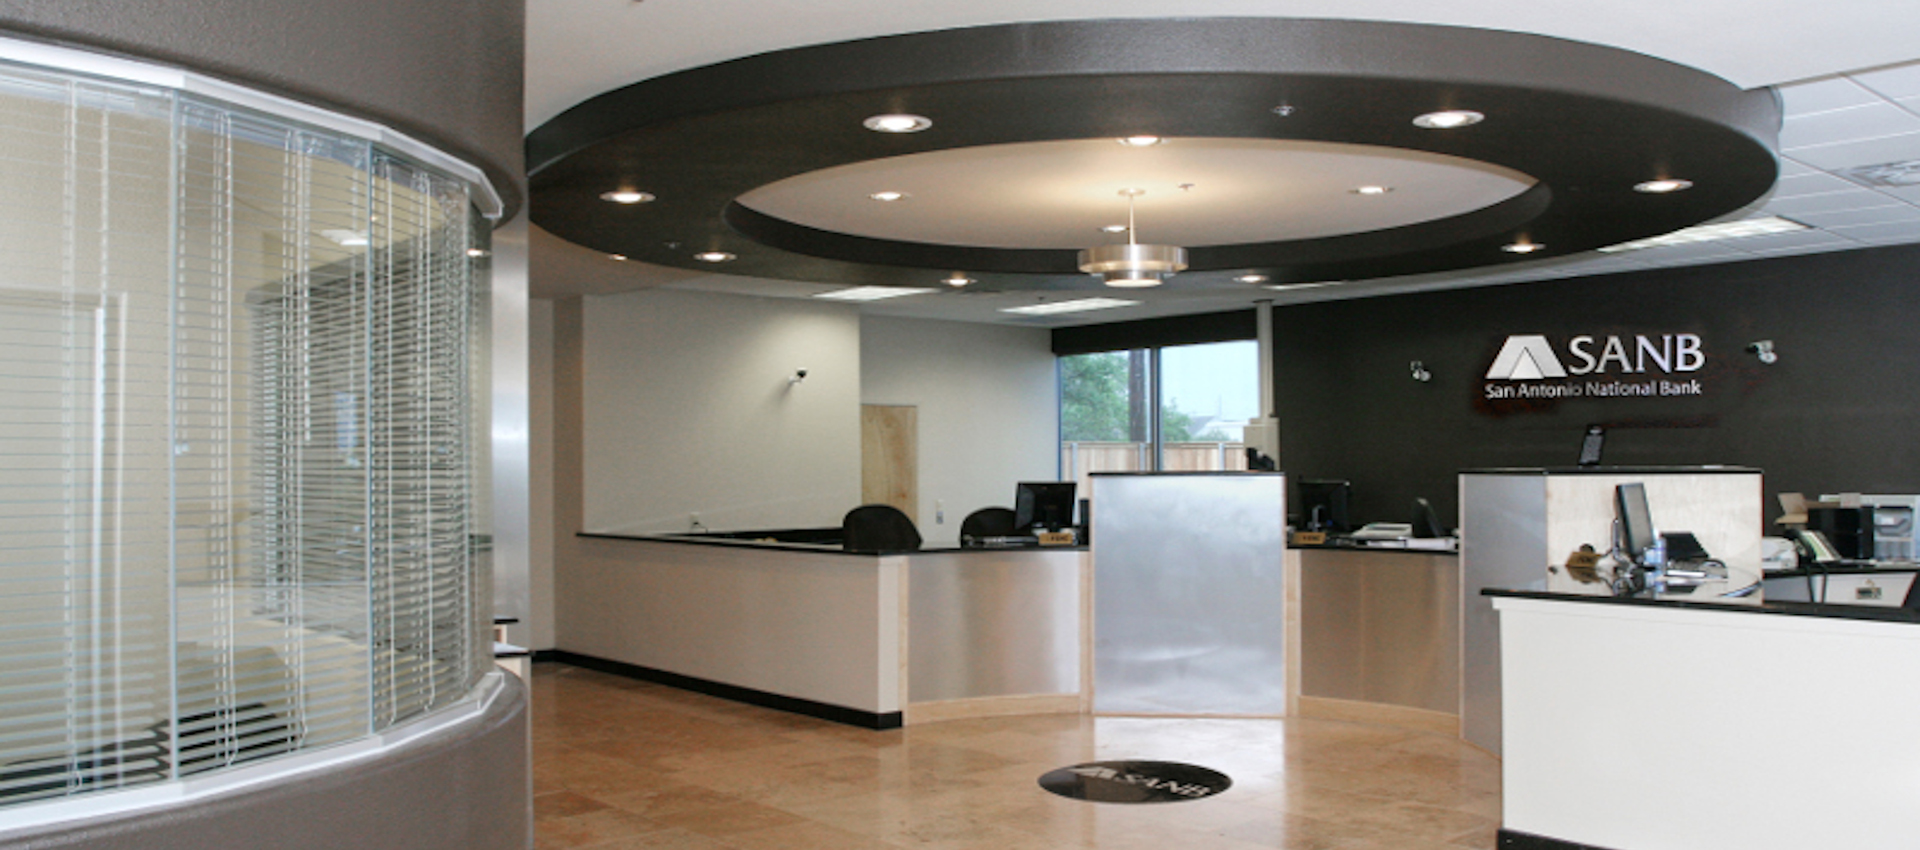 SANB San Antonio National Bank Lobby